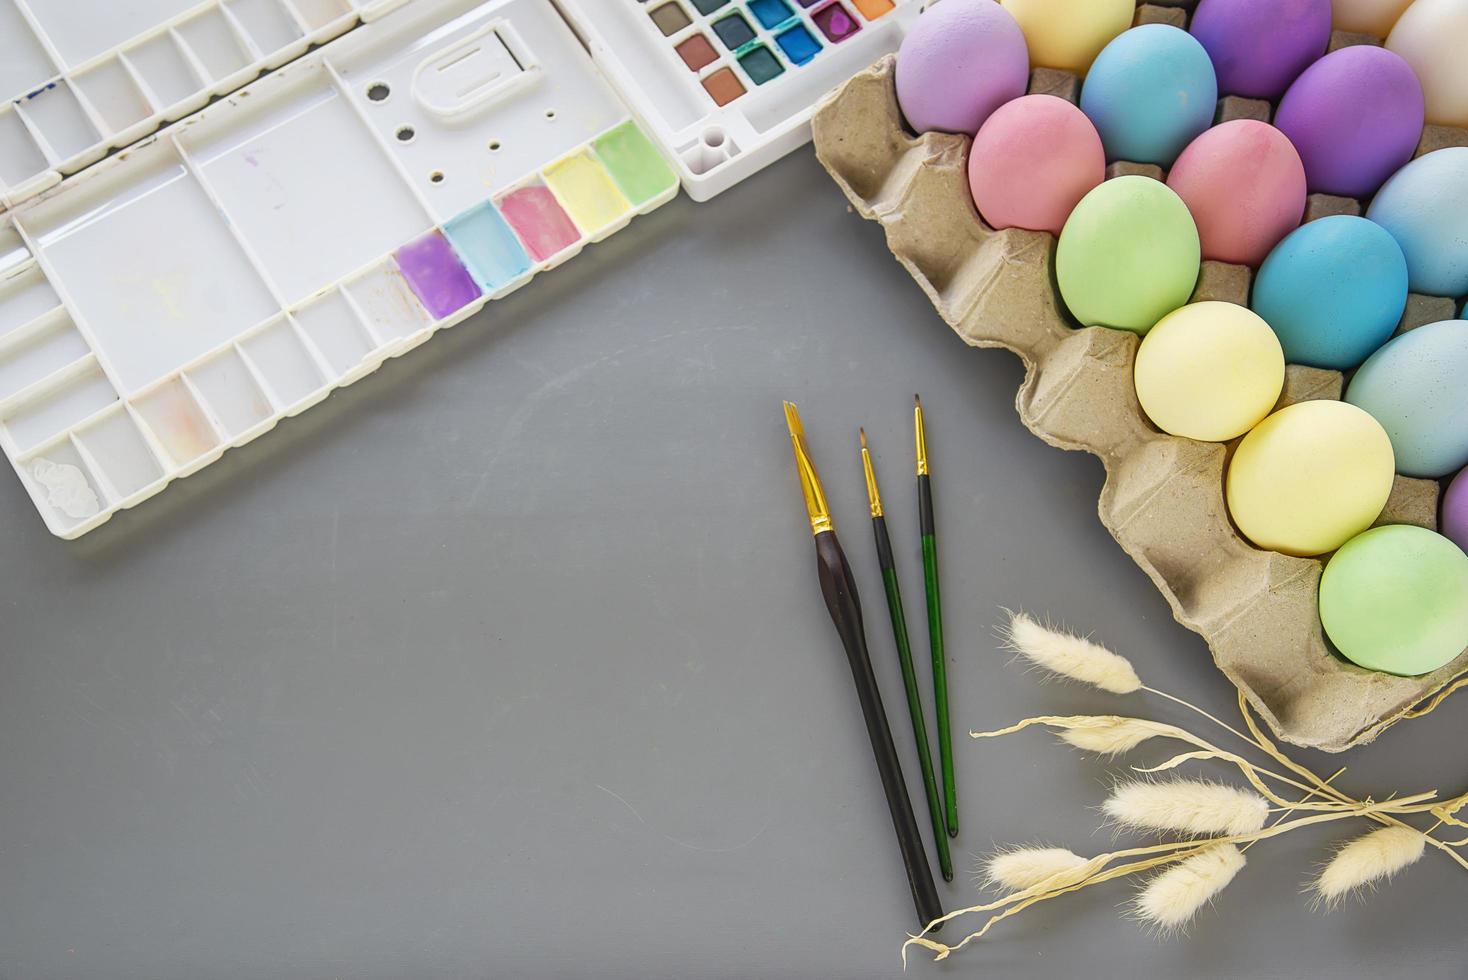 gente pintando coloridos huevos de pascua - concepto de celebración de vacaciones de pascua foto